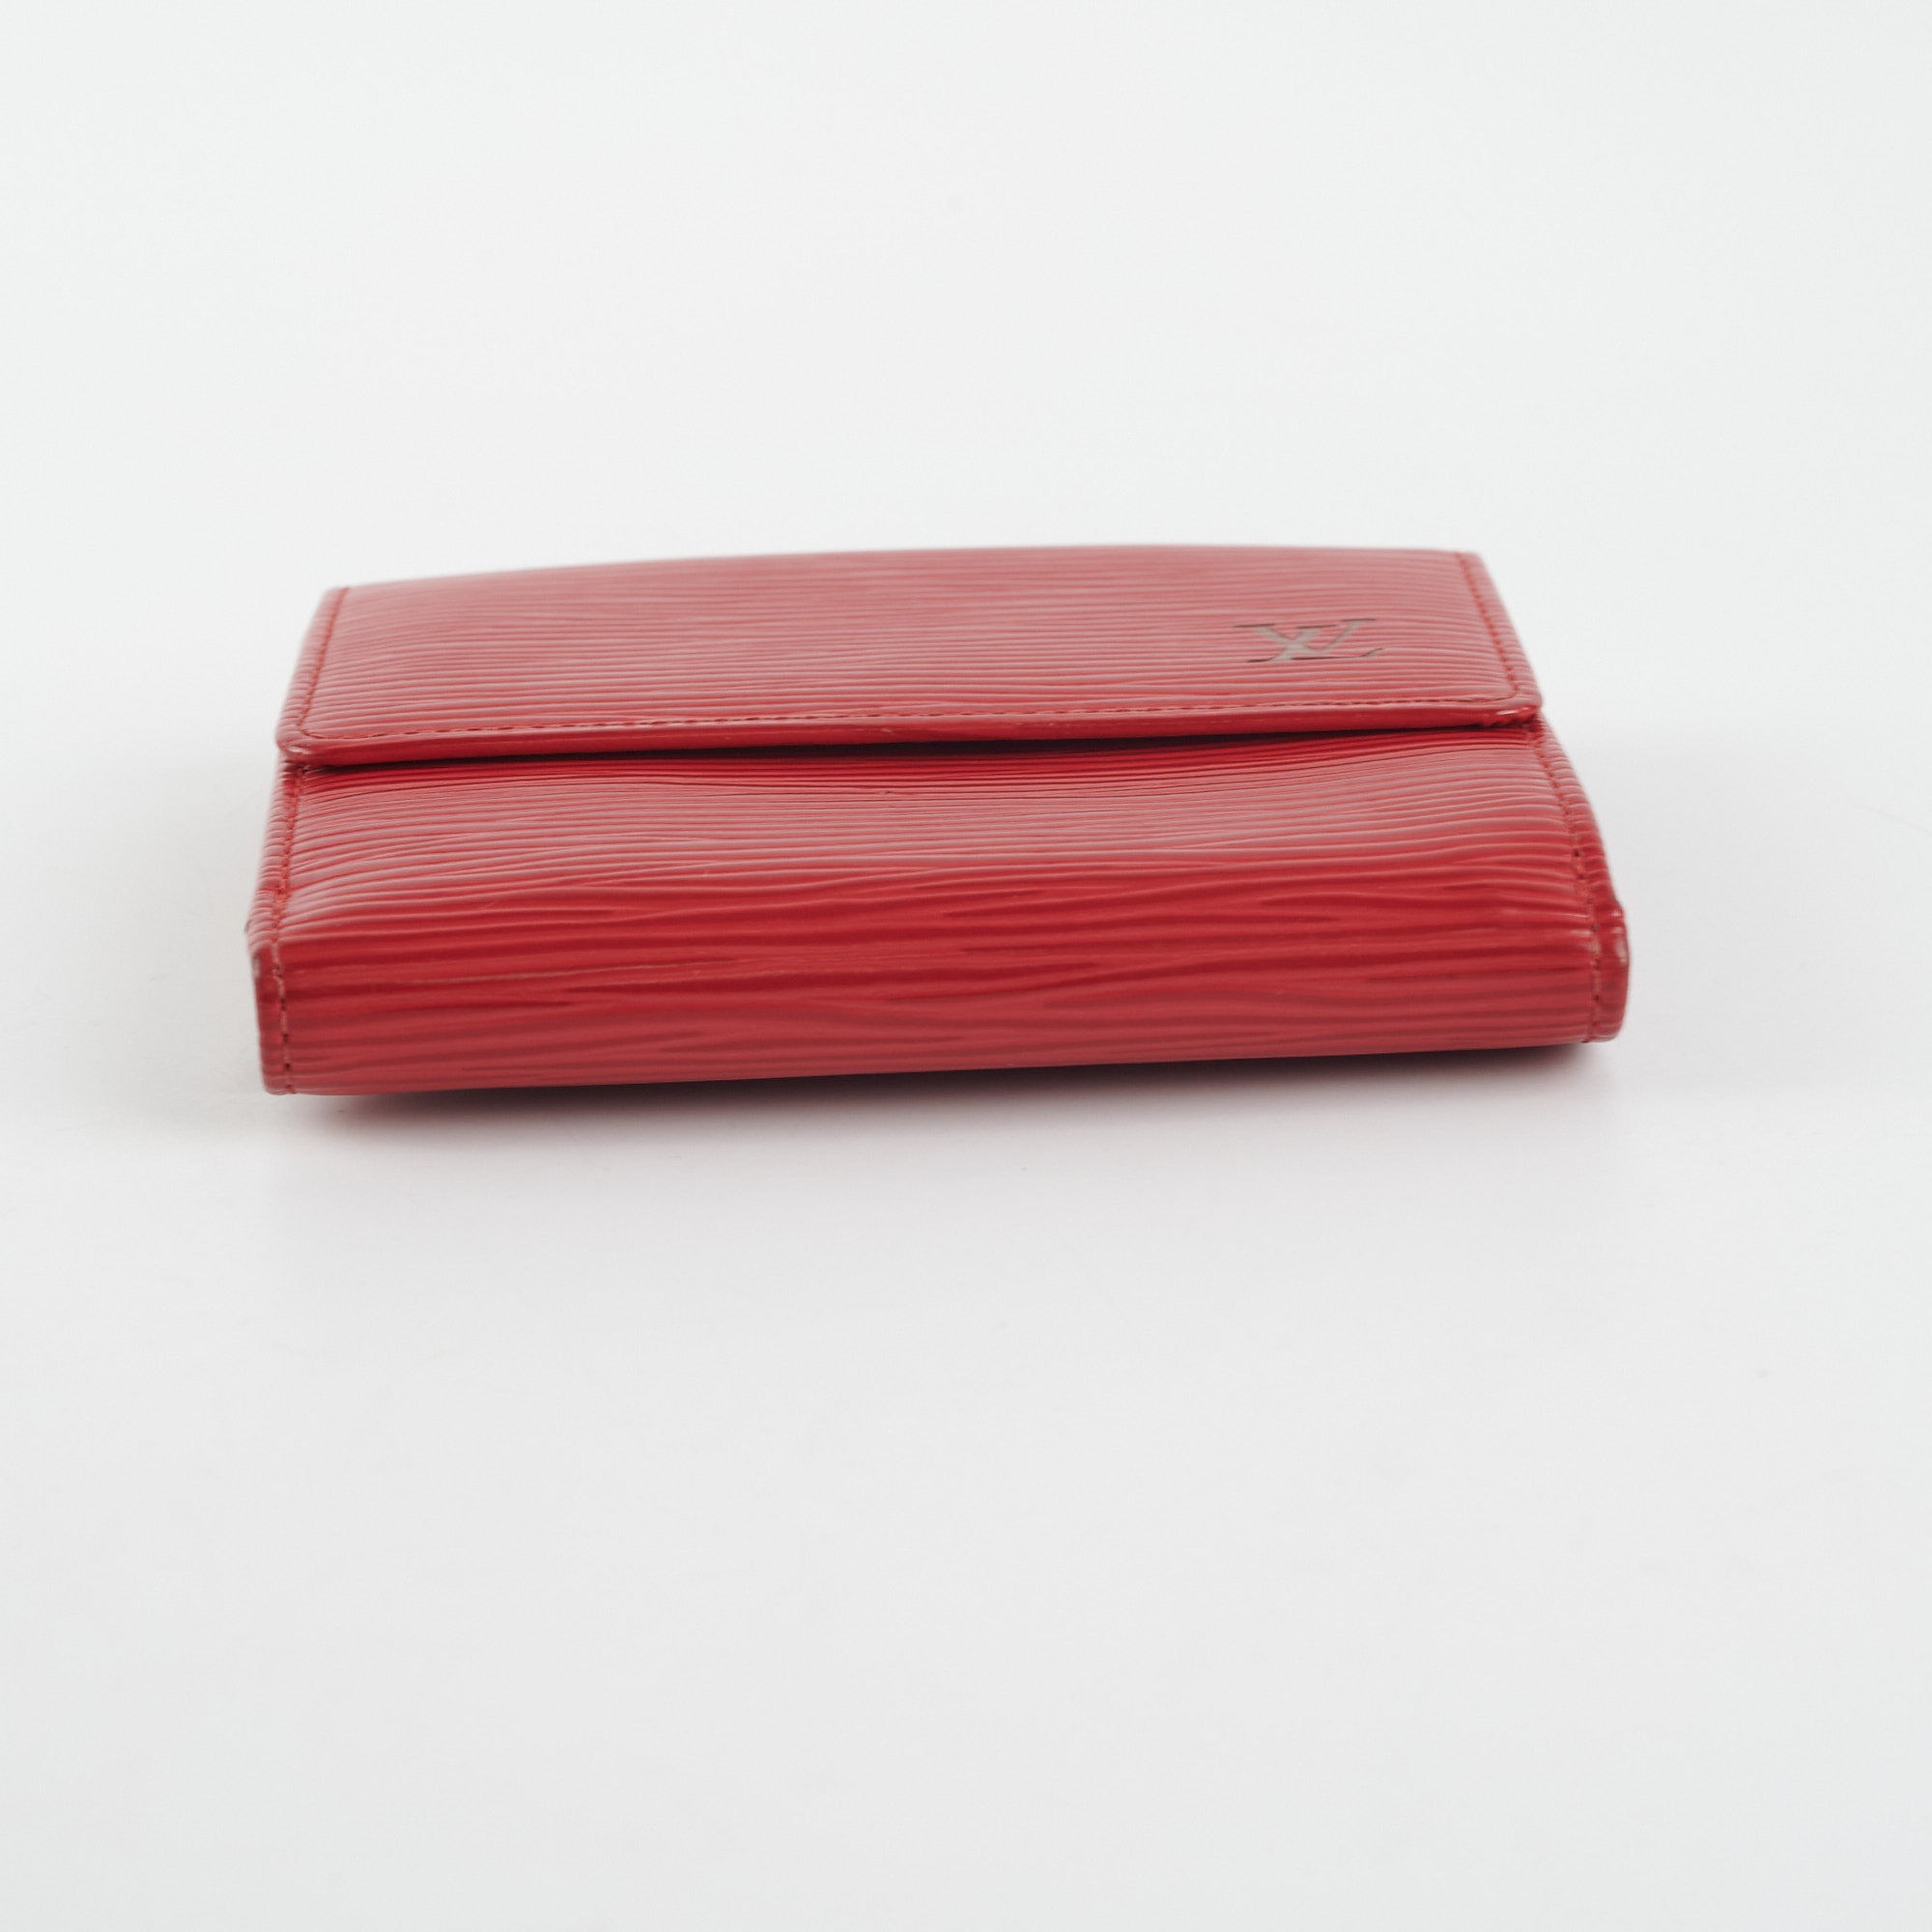 Louis Vuitton Red Epi Change Pouch Coin Purse 25lv613 Wallet